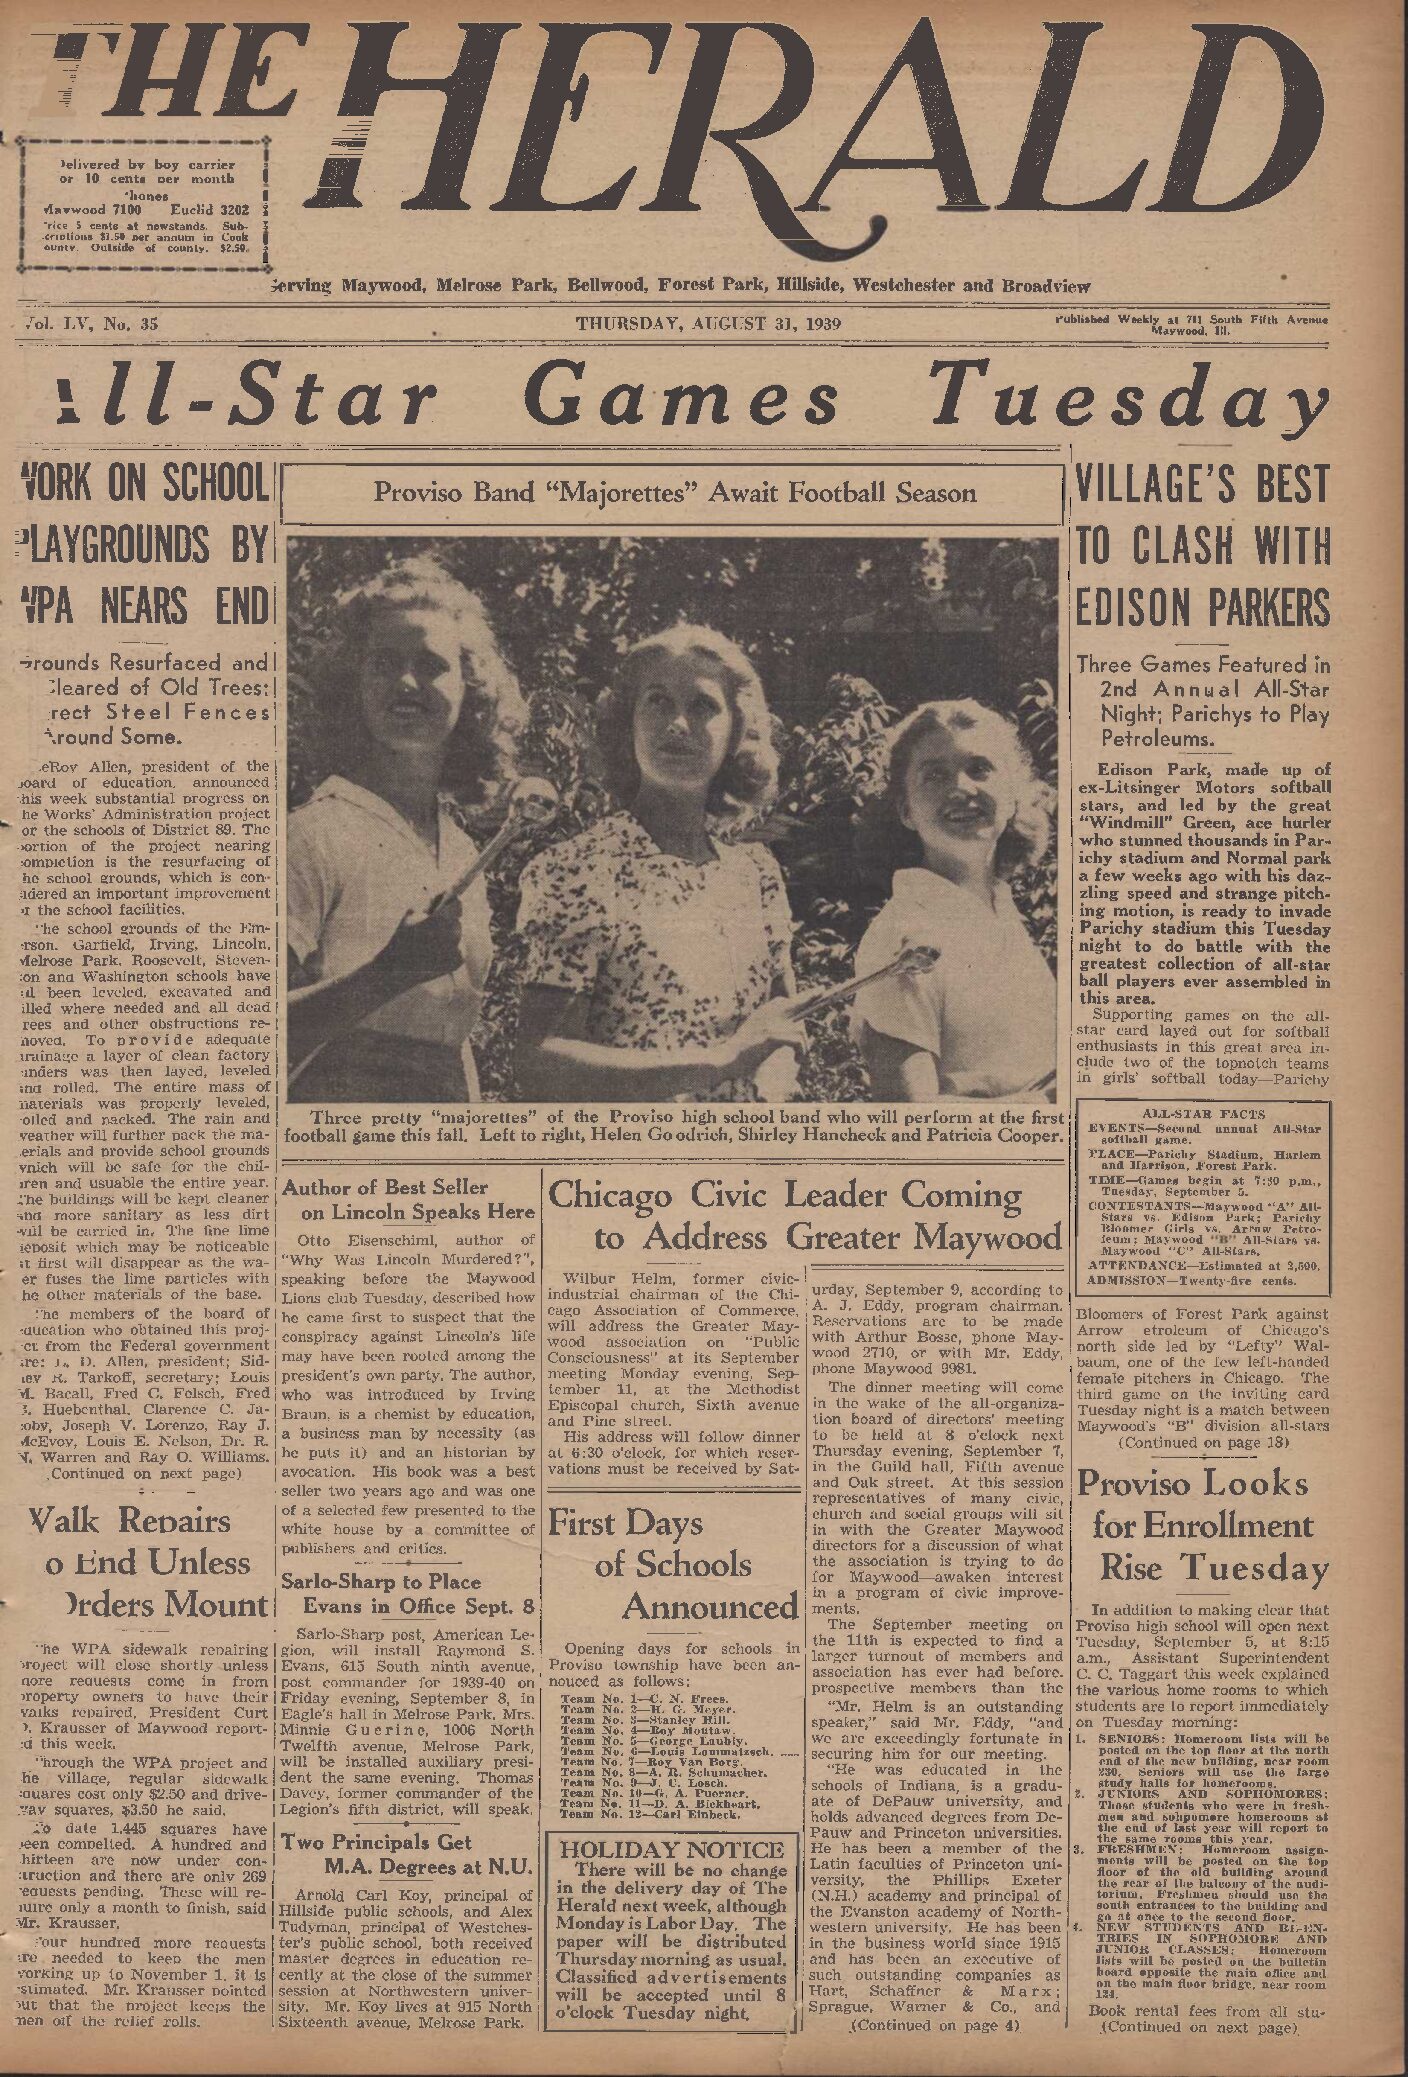 The Herald – 19390831